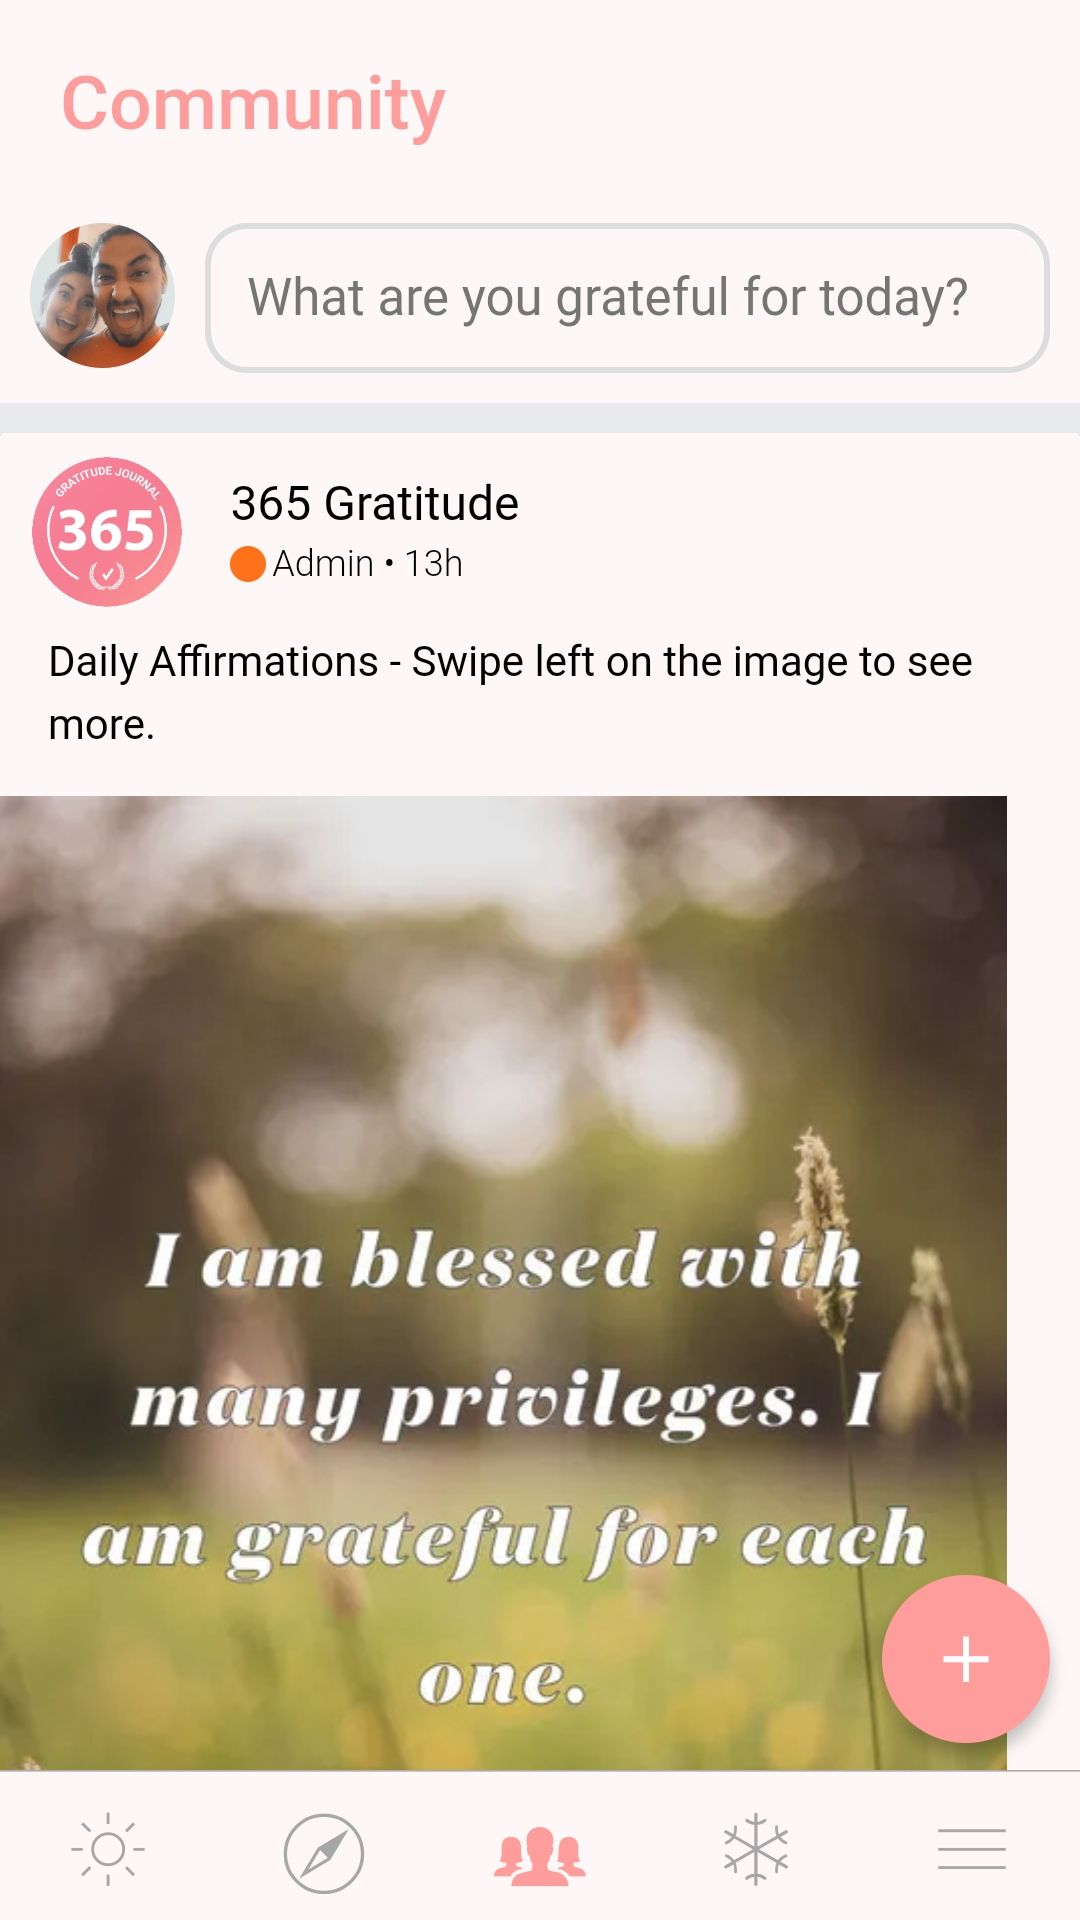 365 Gratitude mobile journaling app community